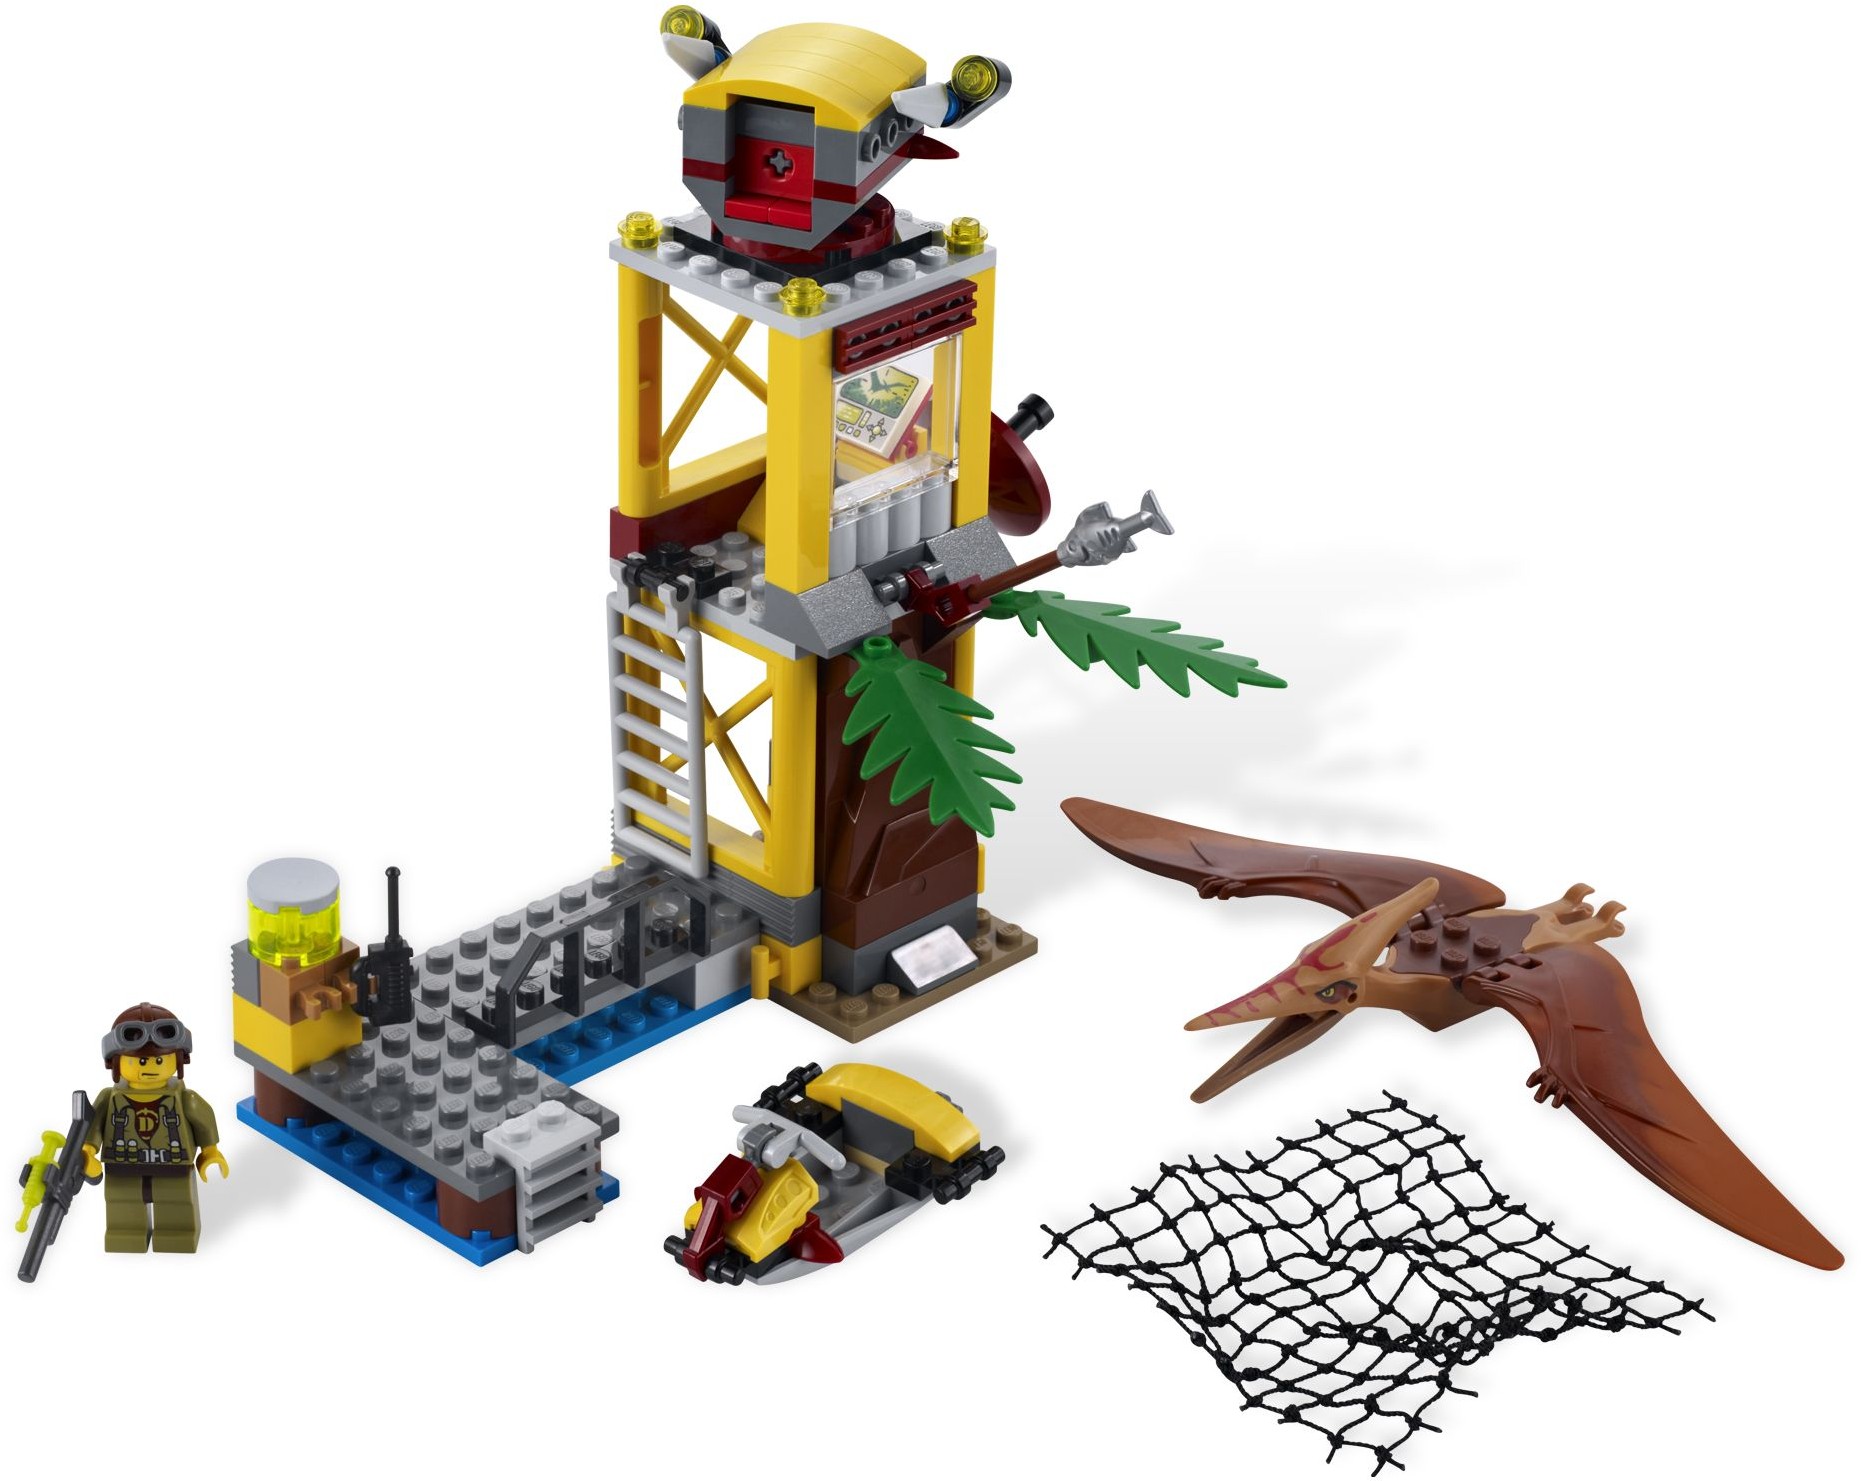 Stijgen Om toestemming te geven Schat Dino | Brickset: LEGO set guide and database